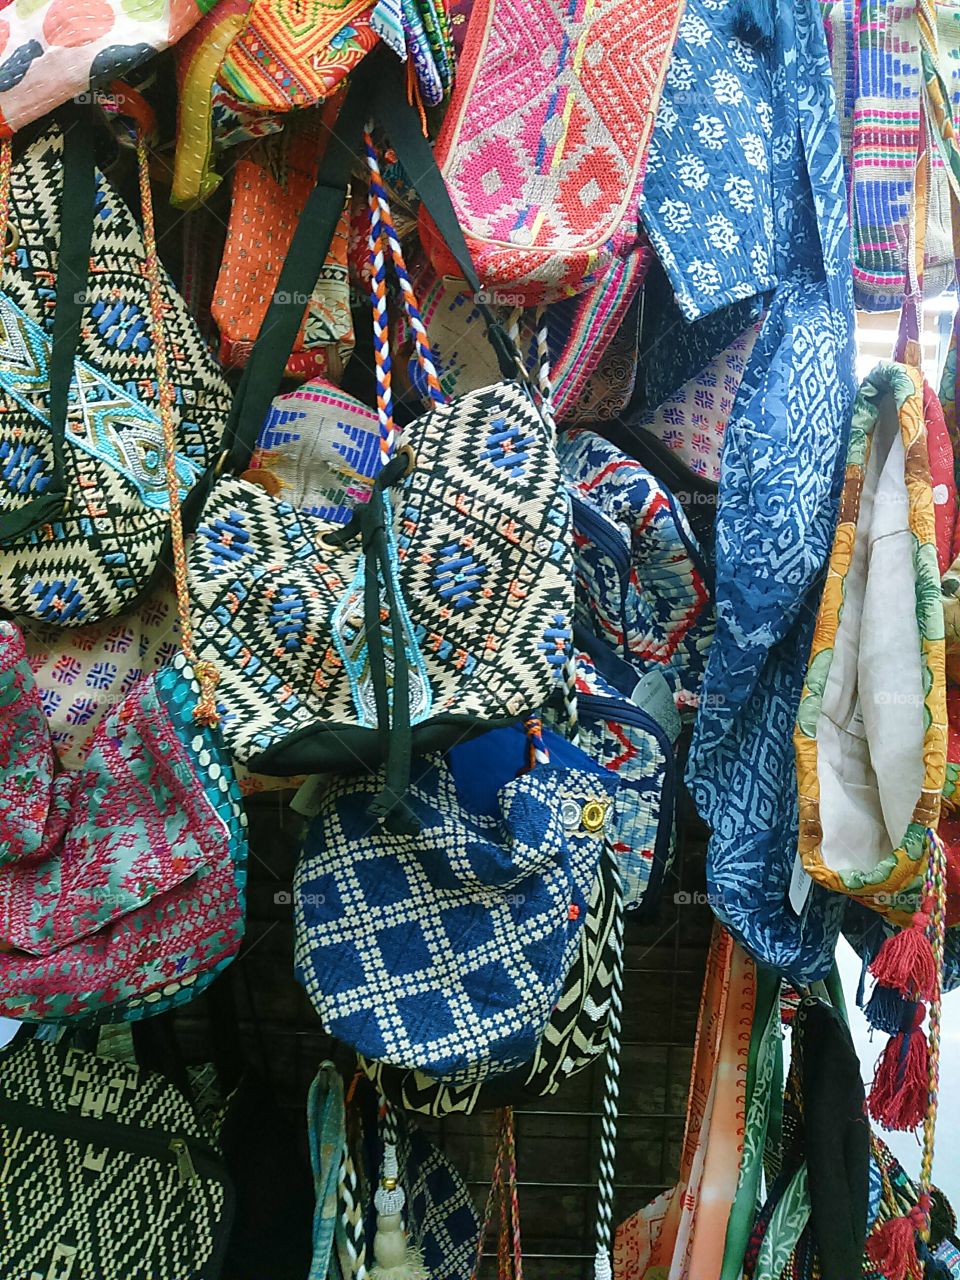 colorful woven handbags galore